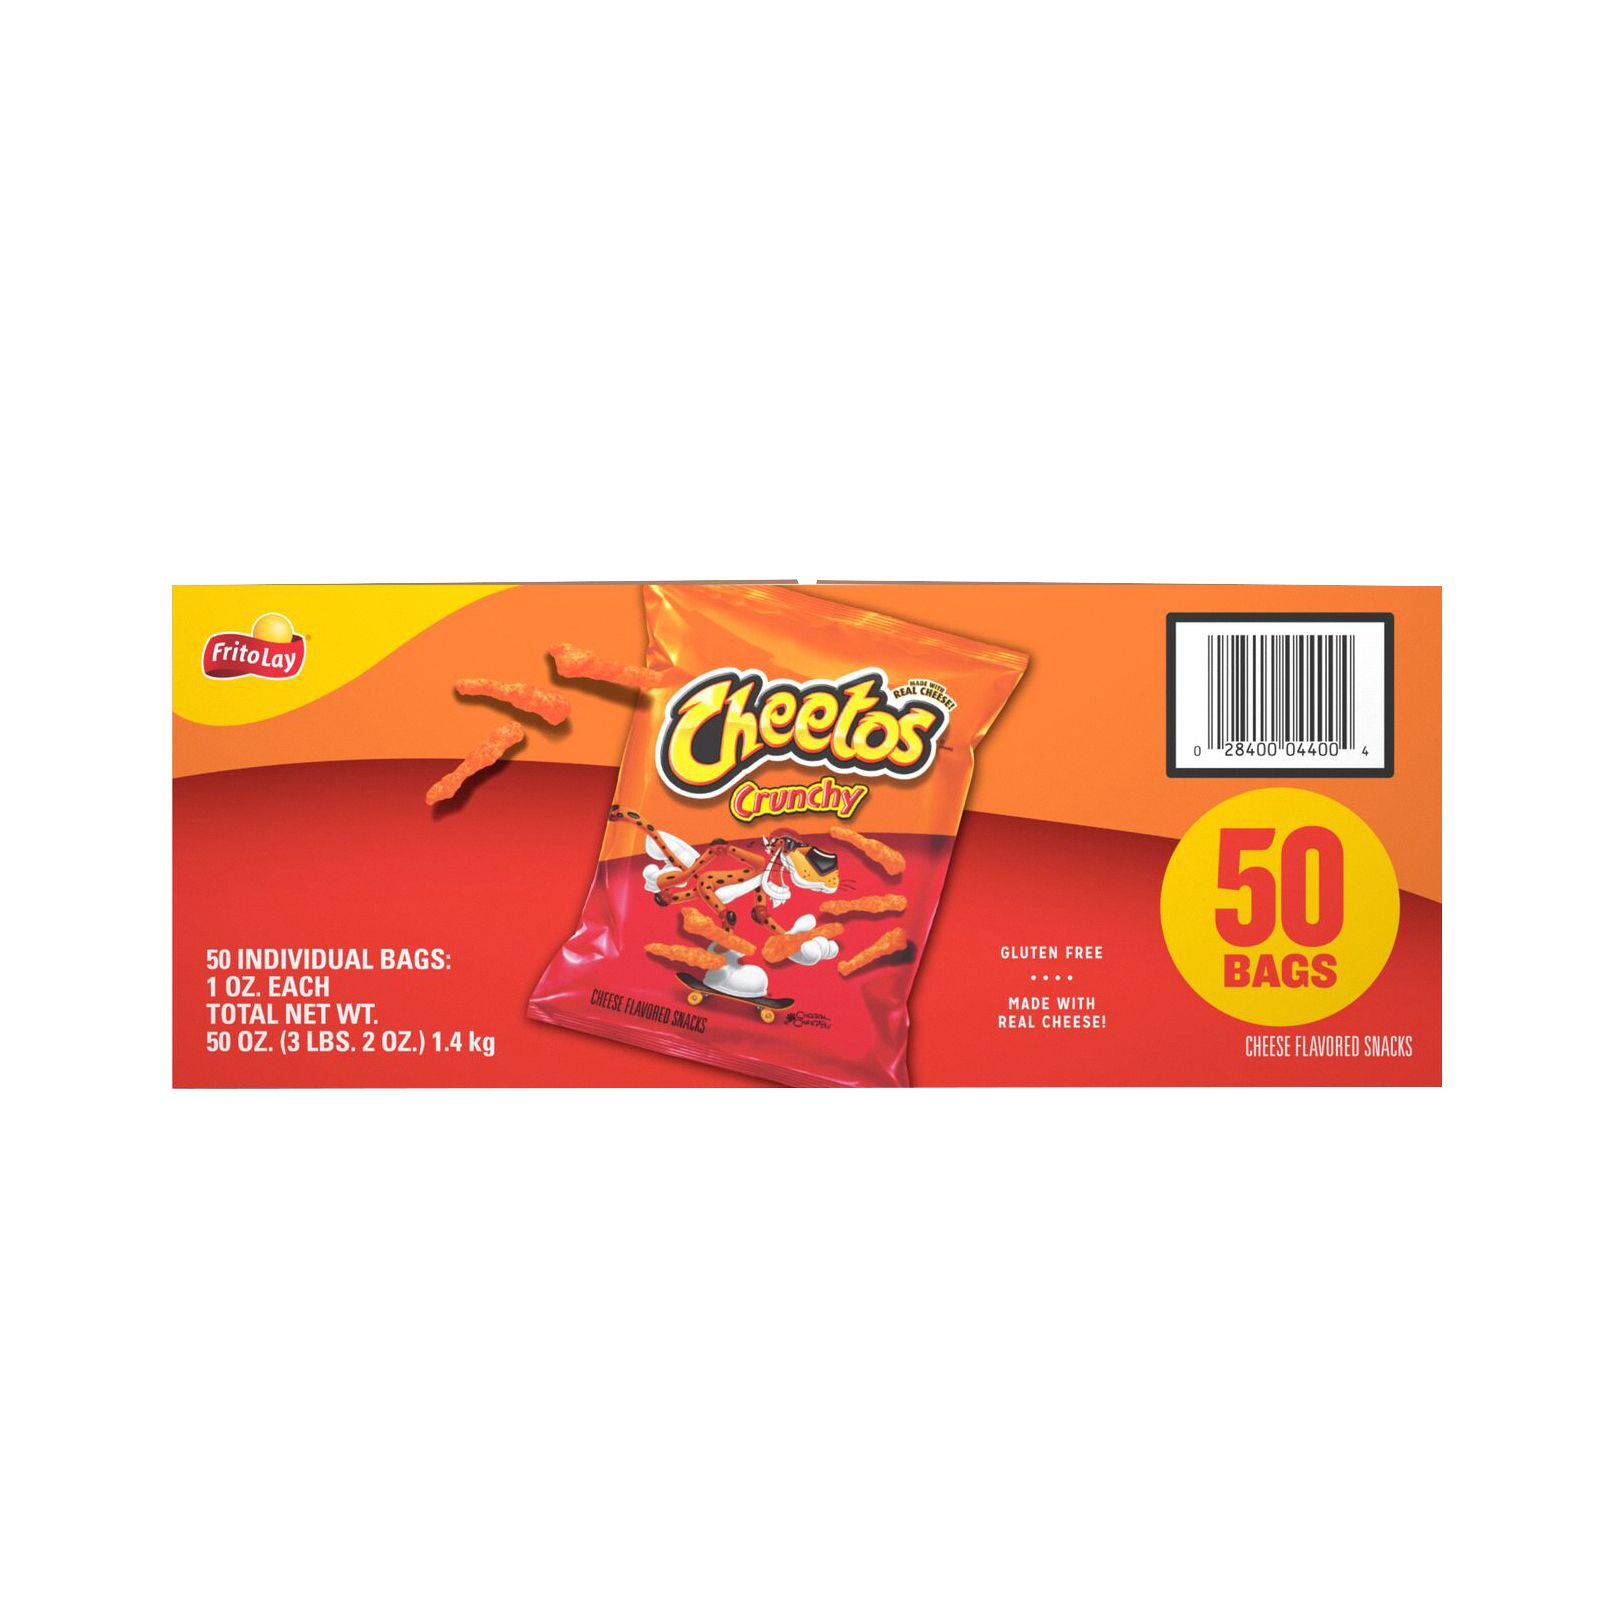 Cheetos Crunchy Flamin' Hot Cheese Flavored Snacks, 9 Oz. 